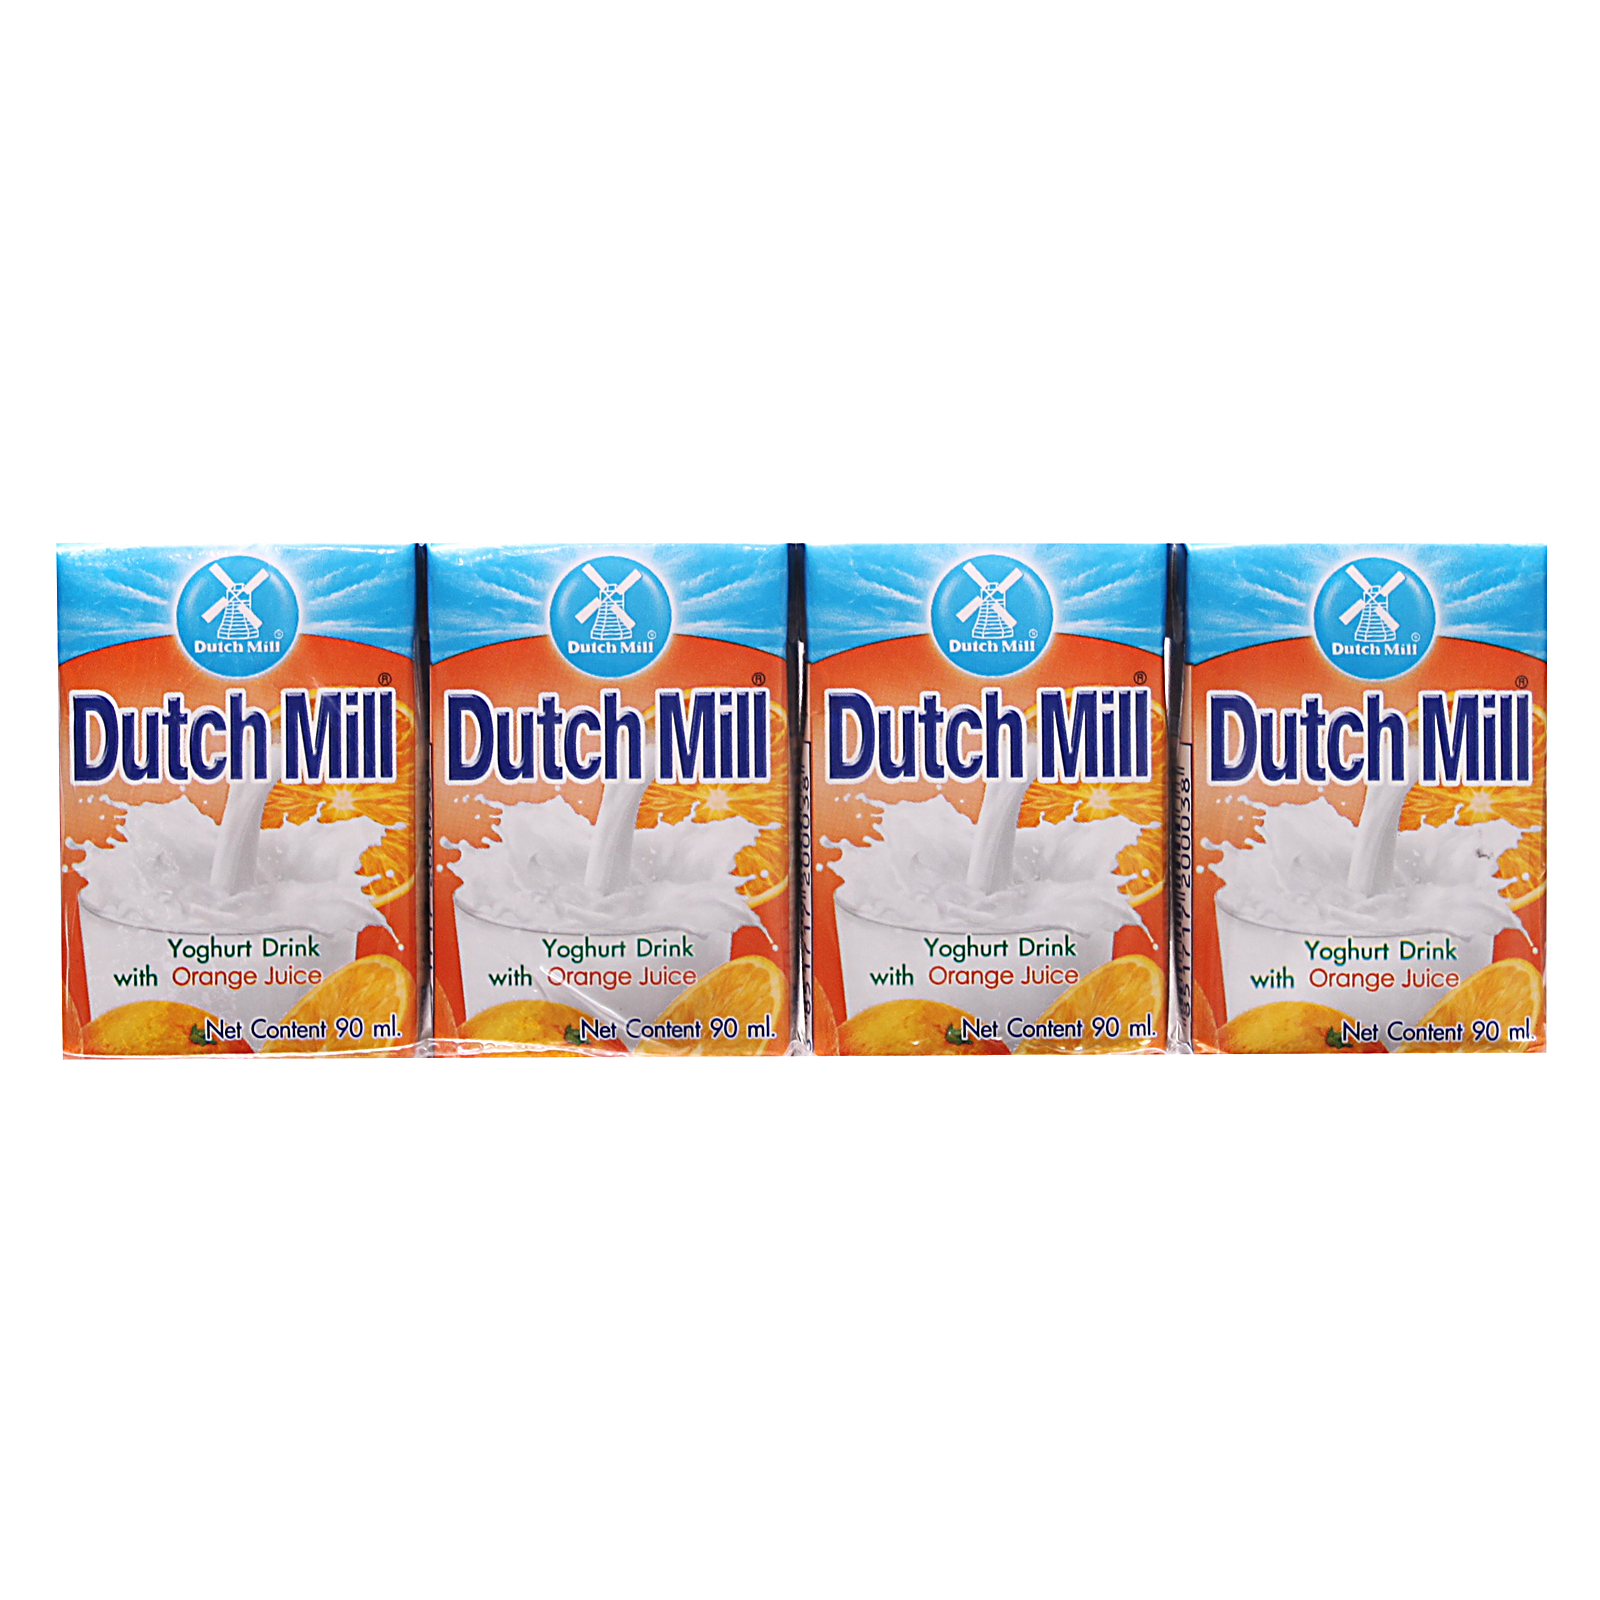 Dutch Mill Yoghurt Drink with Orange Juice 0 - from RedMart